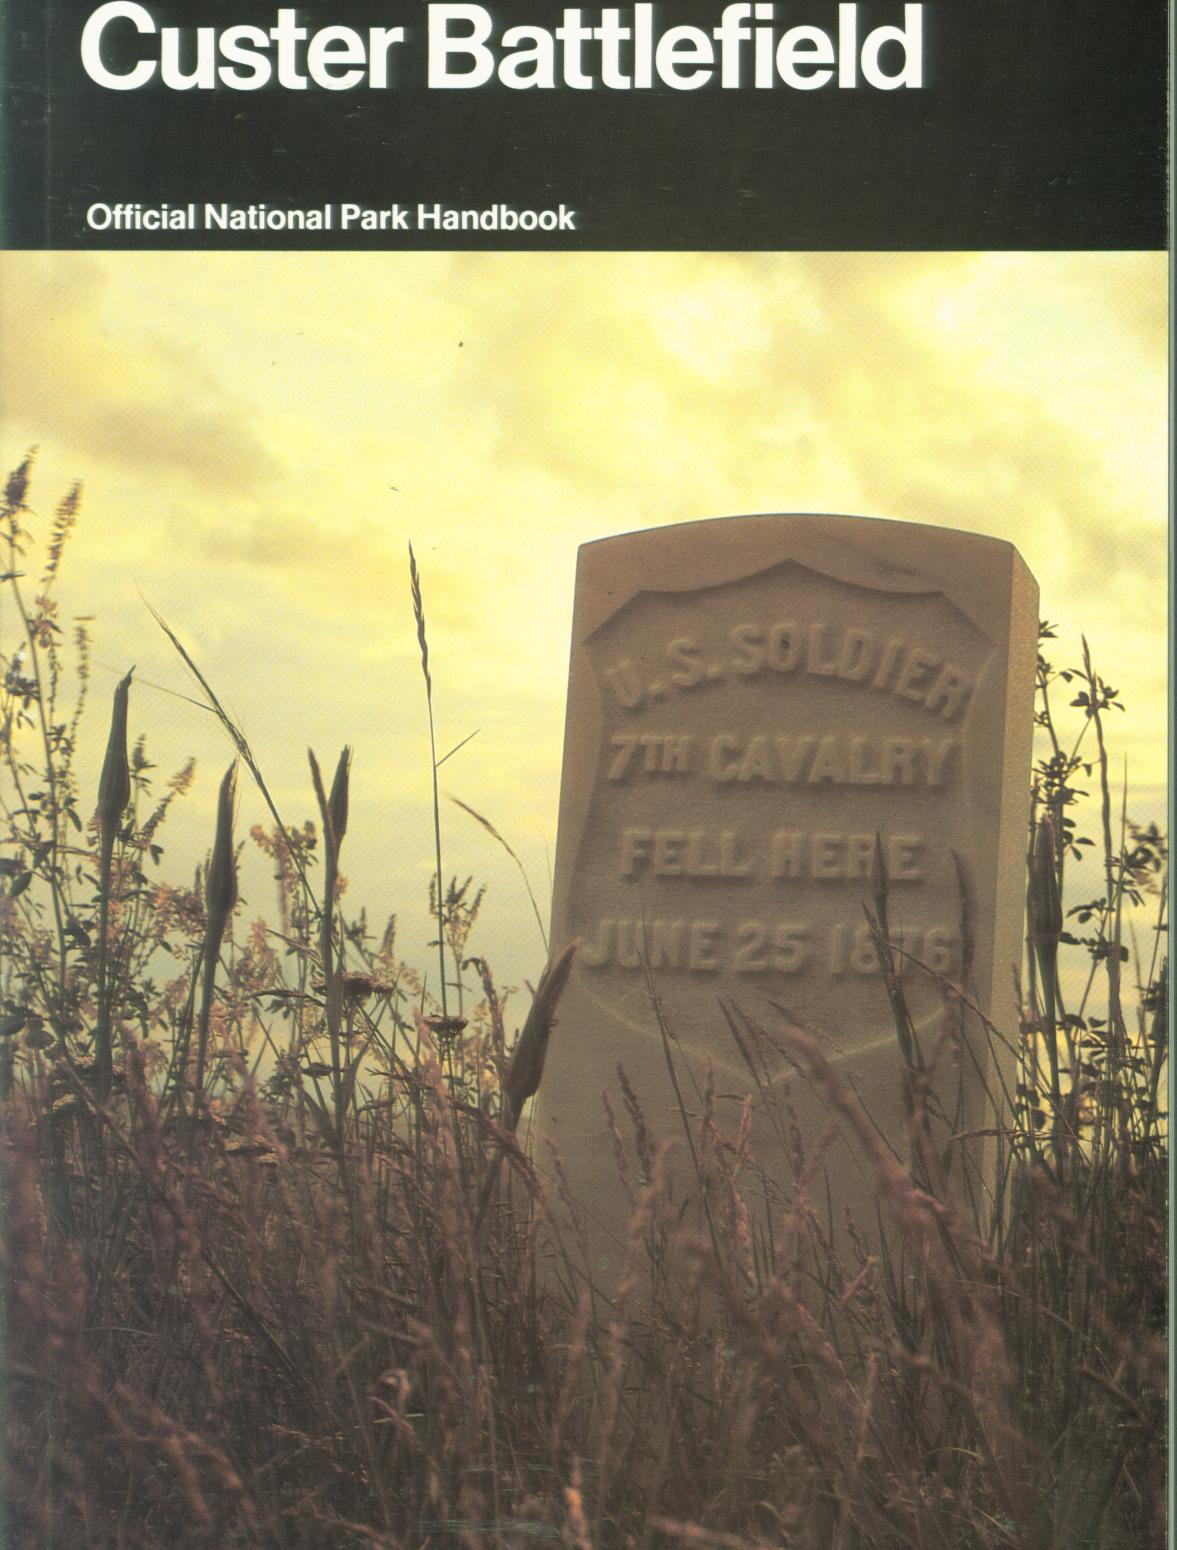 CUSTER BATTLEFIELD (now Battle of Little Bighorn) NATIONAL MONUMENT (MT). 